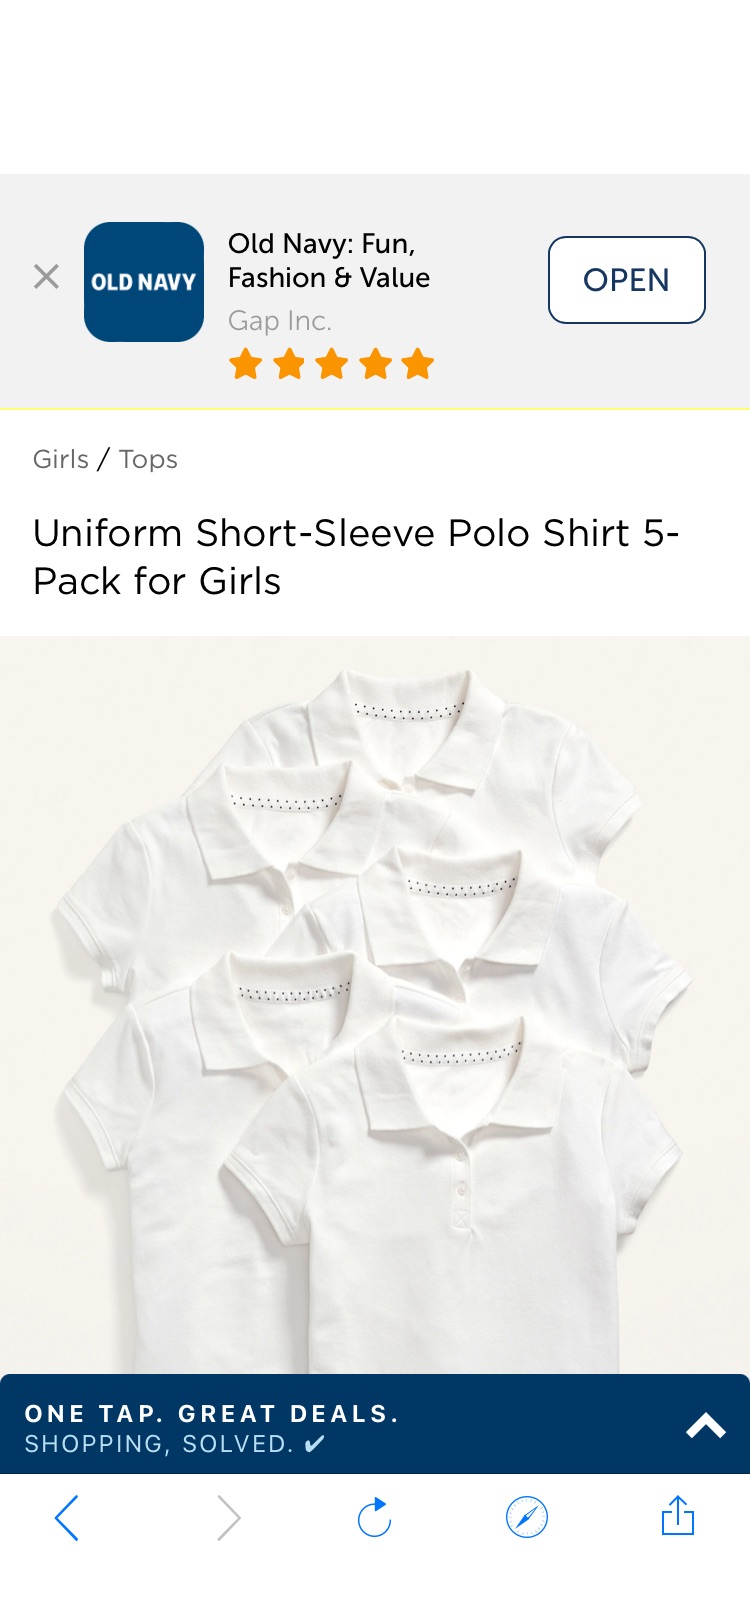 Uniform Short-Sleeve Polo Shirt 5-Pack for Girls | Old Navy女孩短袖校服